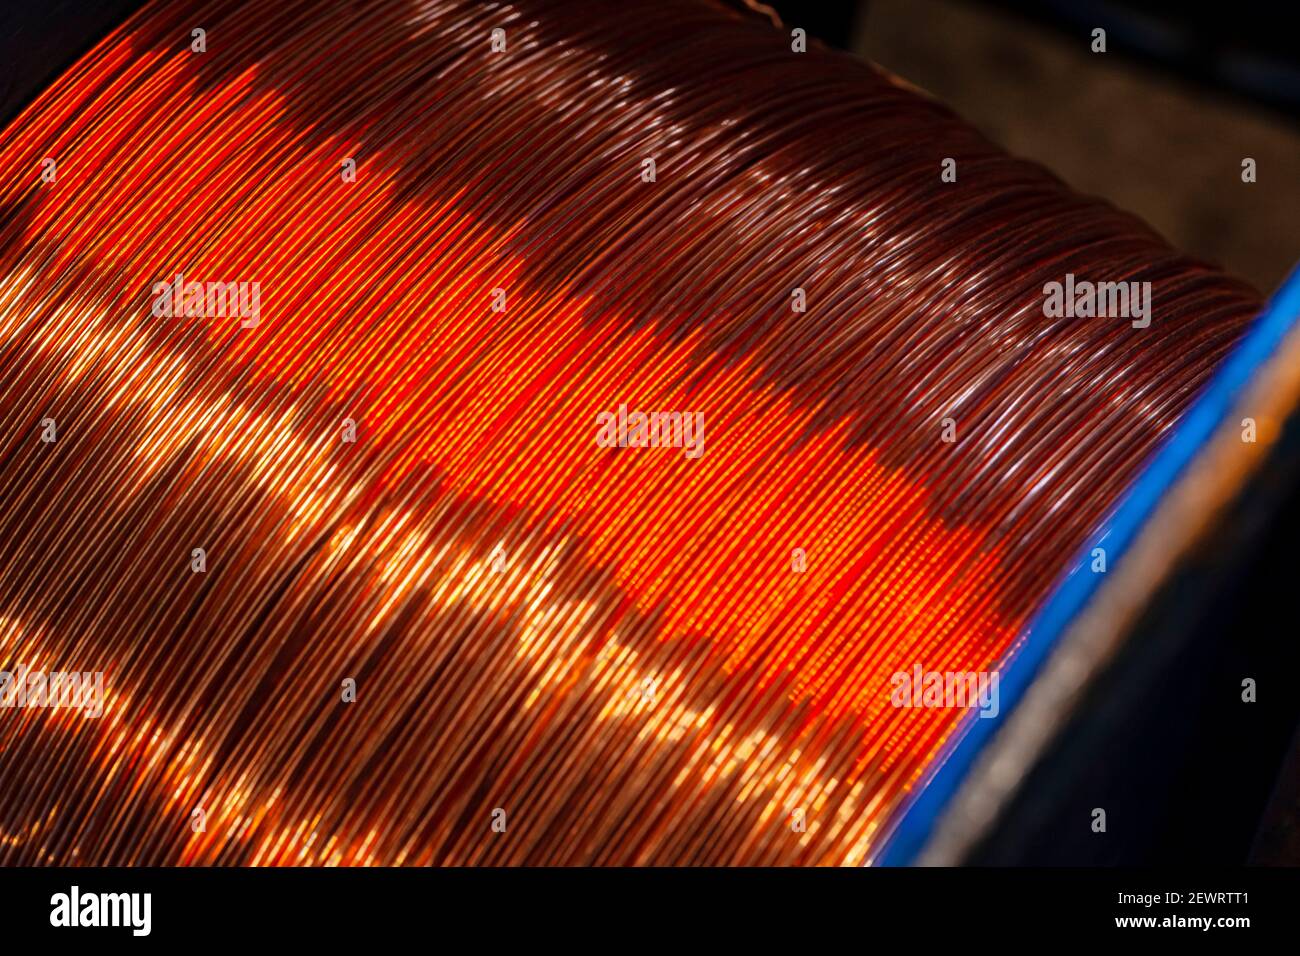 https://c8.alamy.com/comp/2EWRTT1/copper-wire-reels-in-cable-factory-close-up-2EWRTT1.jpg